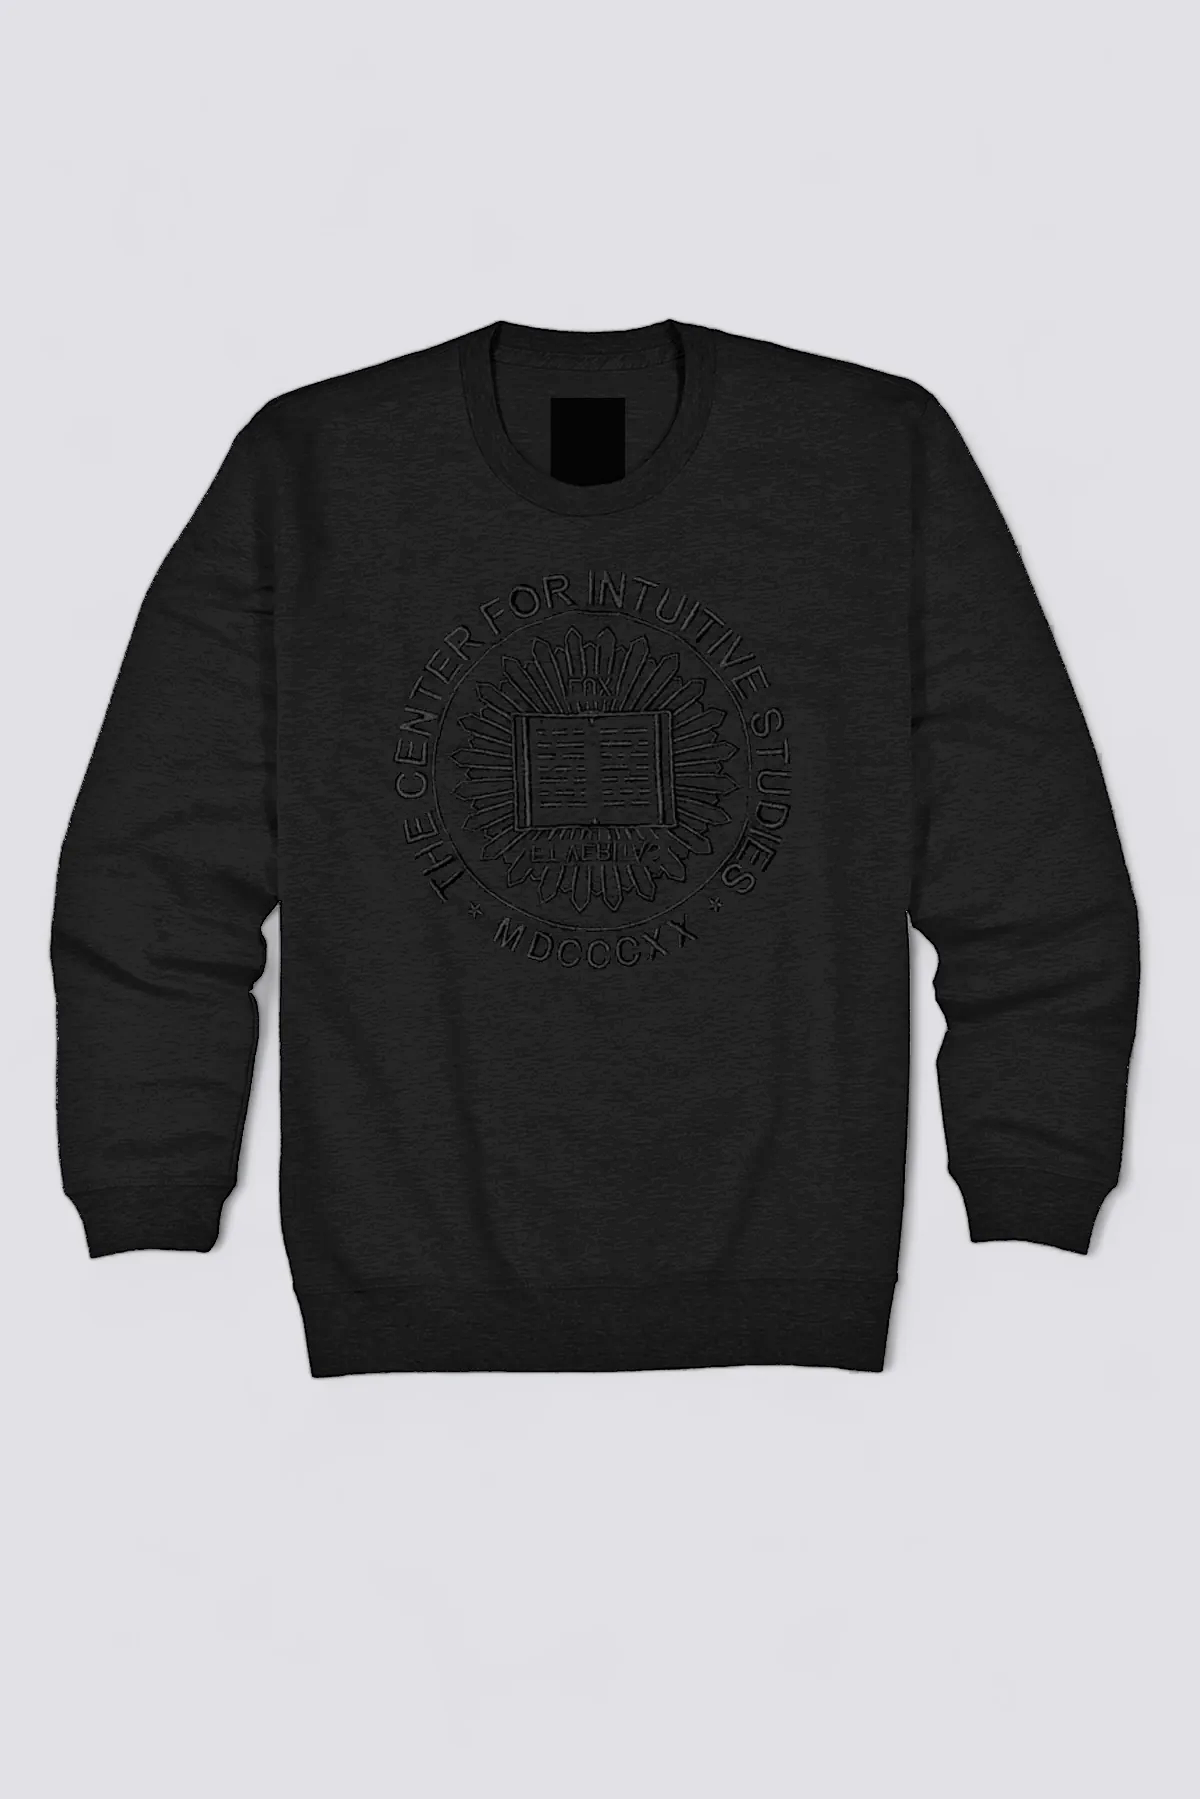 The Center For Intuitive Studies Circle Logo Sweatshirt - Black